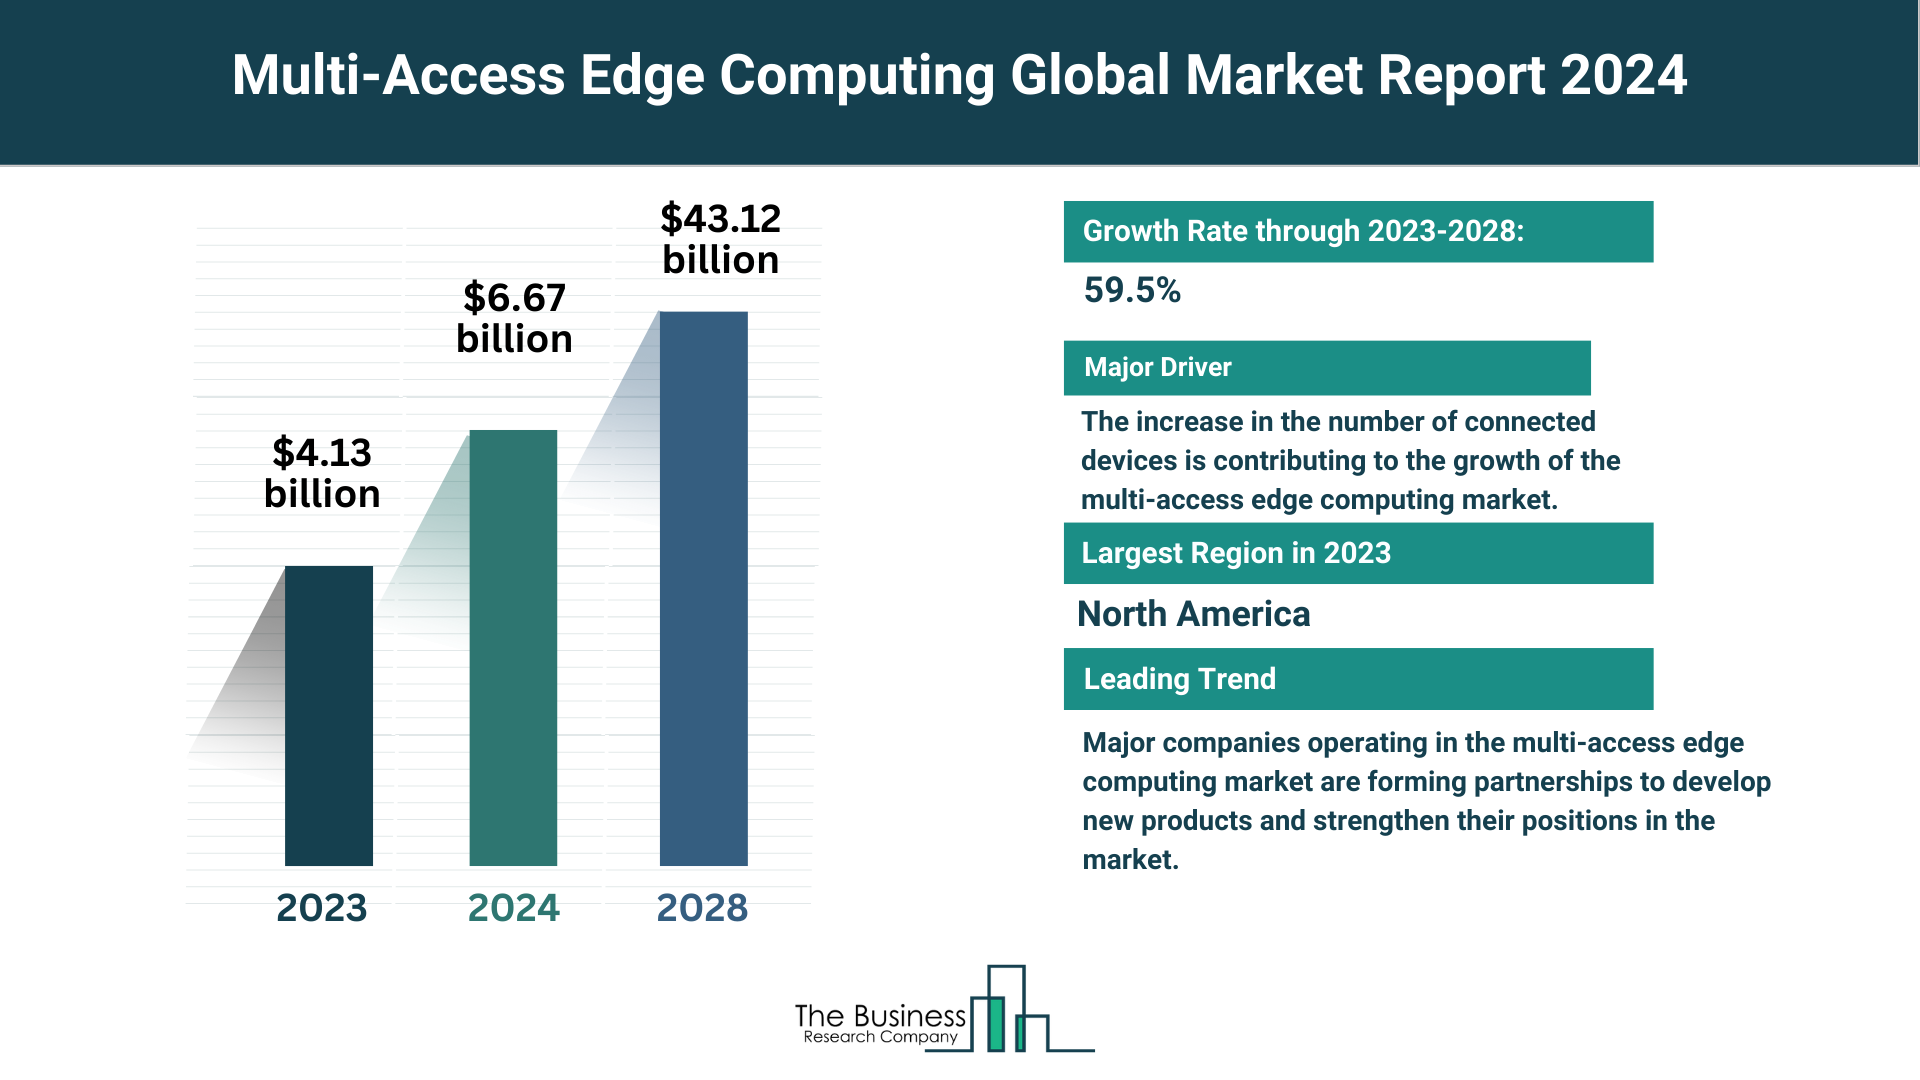 Global Multi-Access Edge Computing Market